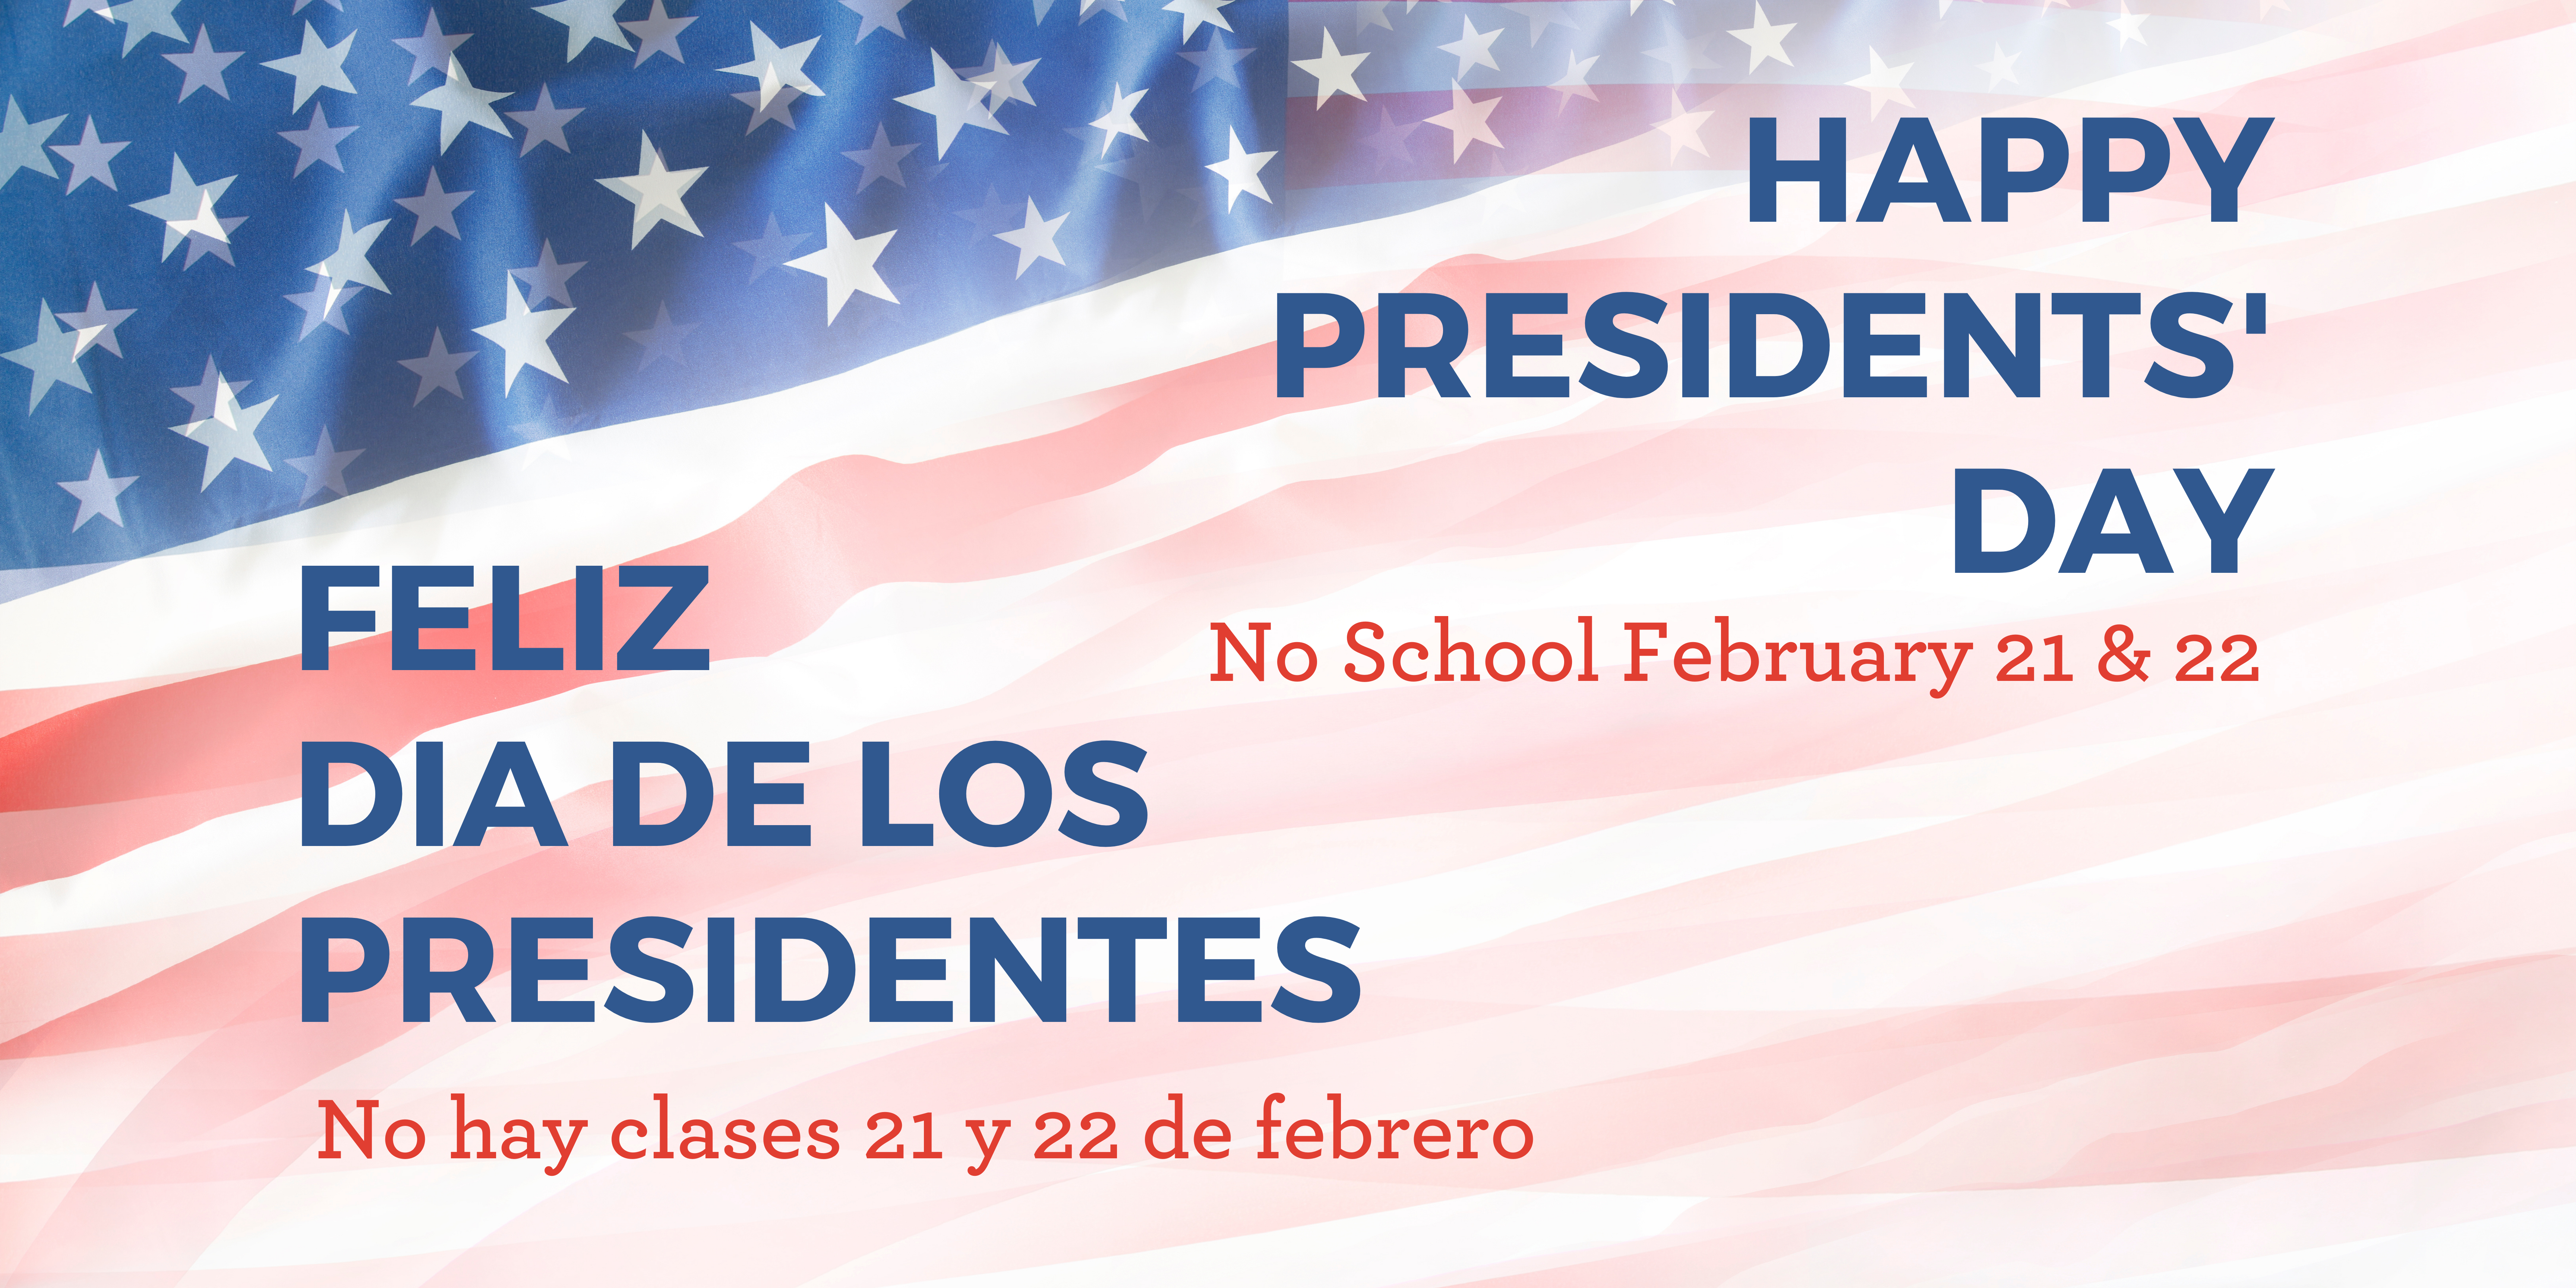 American flag background with "Happy Presidents' Day" and "Feliz Día de los Presidentes" in blue text and "No school February 21 & 22" and "No hay clases 21 y 22 de febrero" in red text.